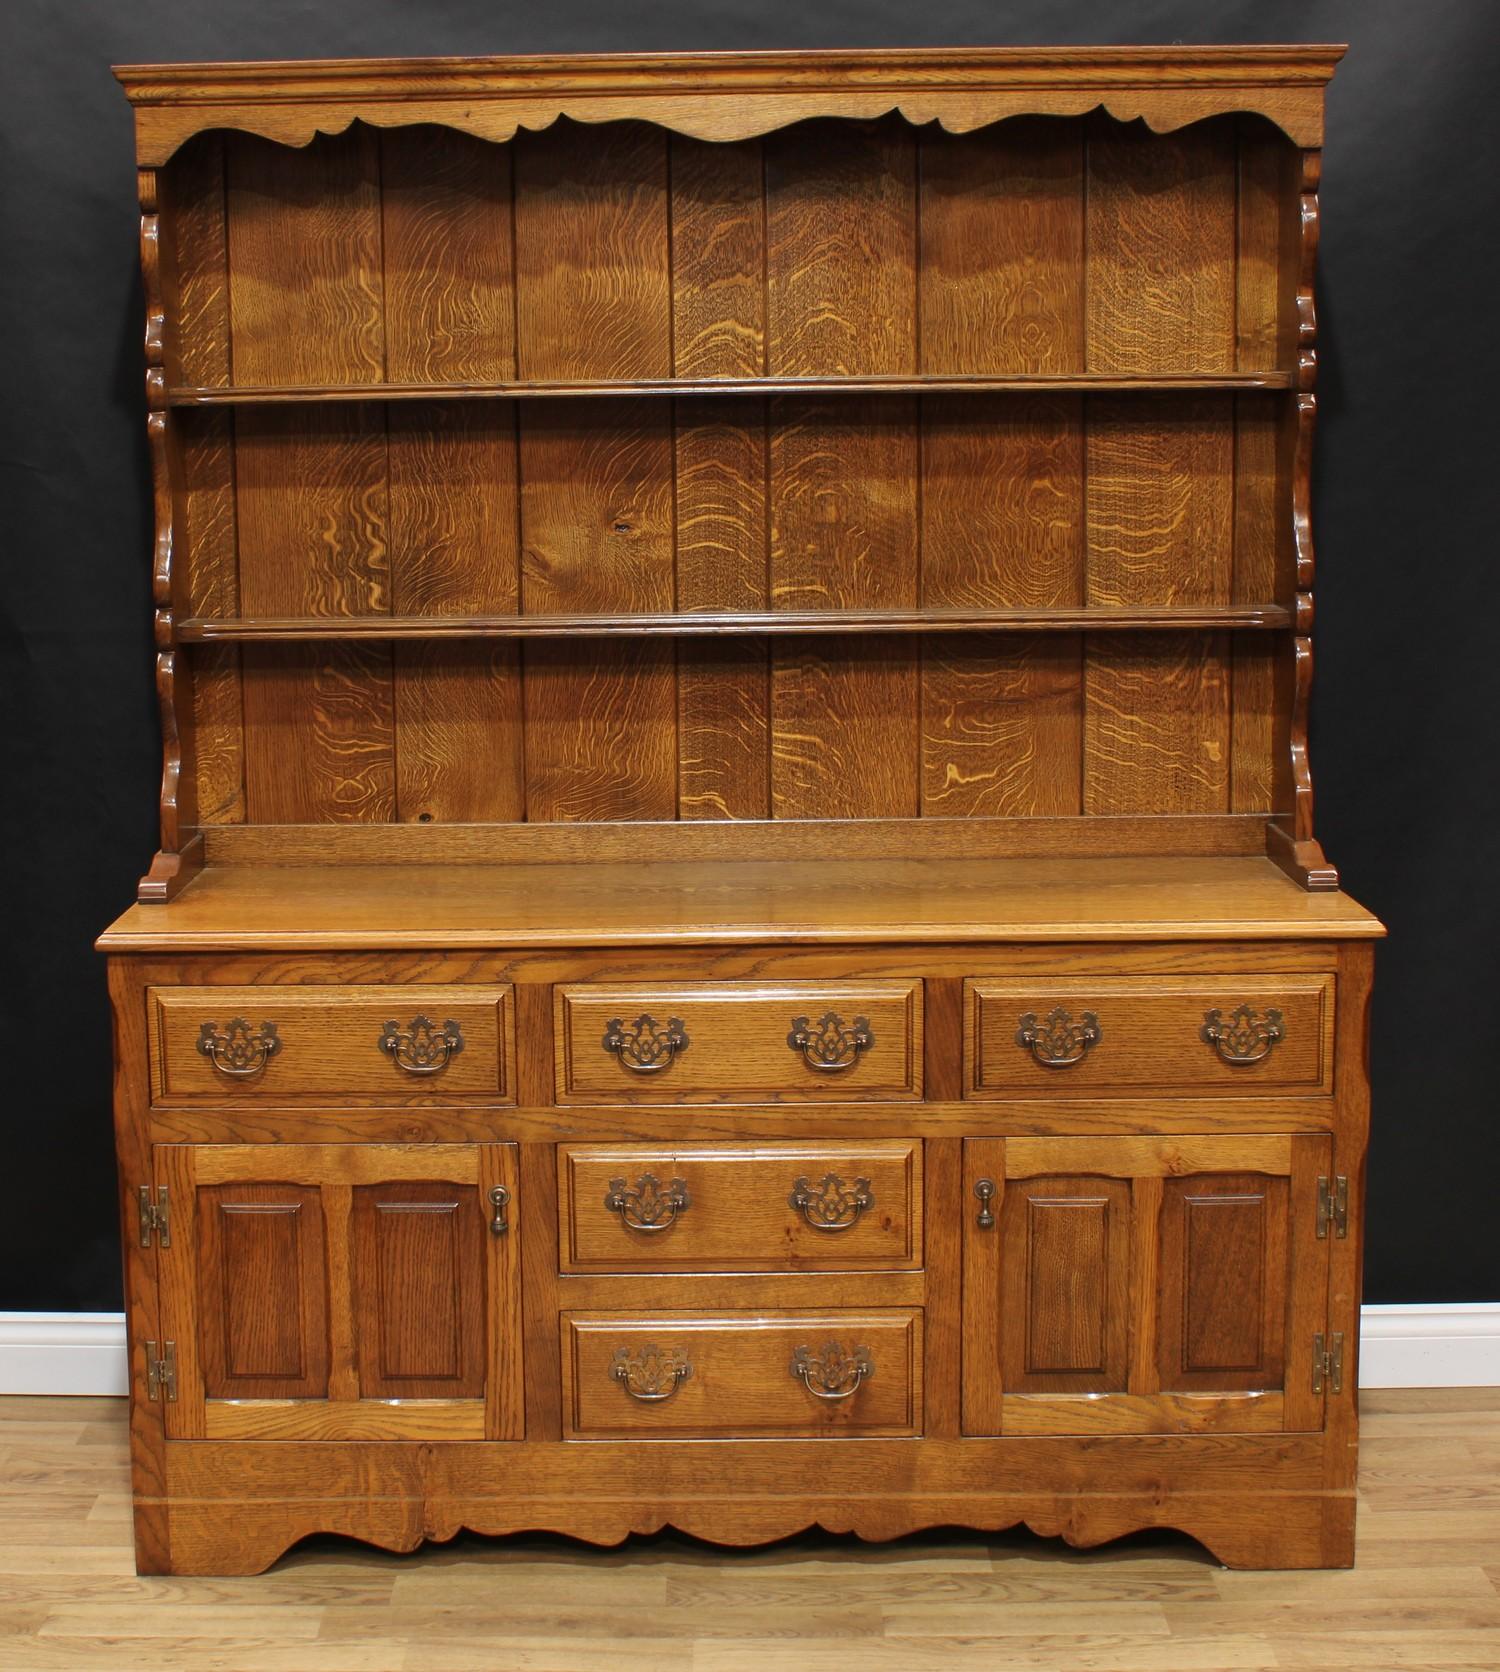 A George III style oak dresser, outswept cornice above a shaped apron and two plate racks, the